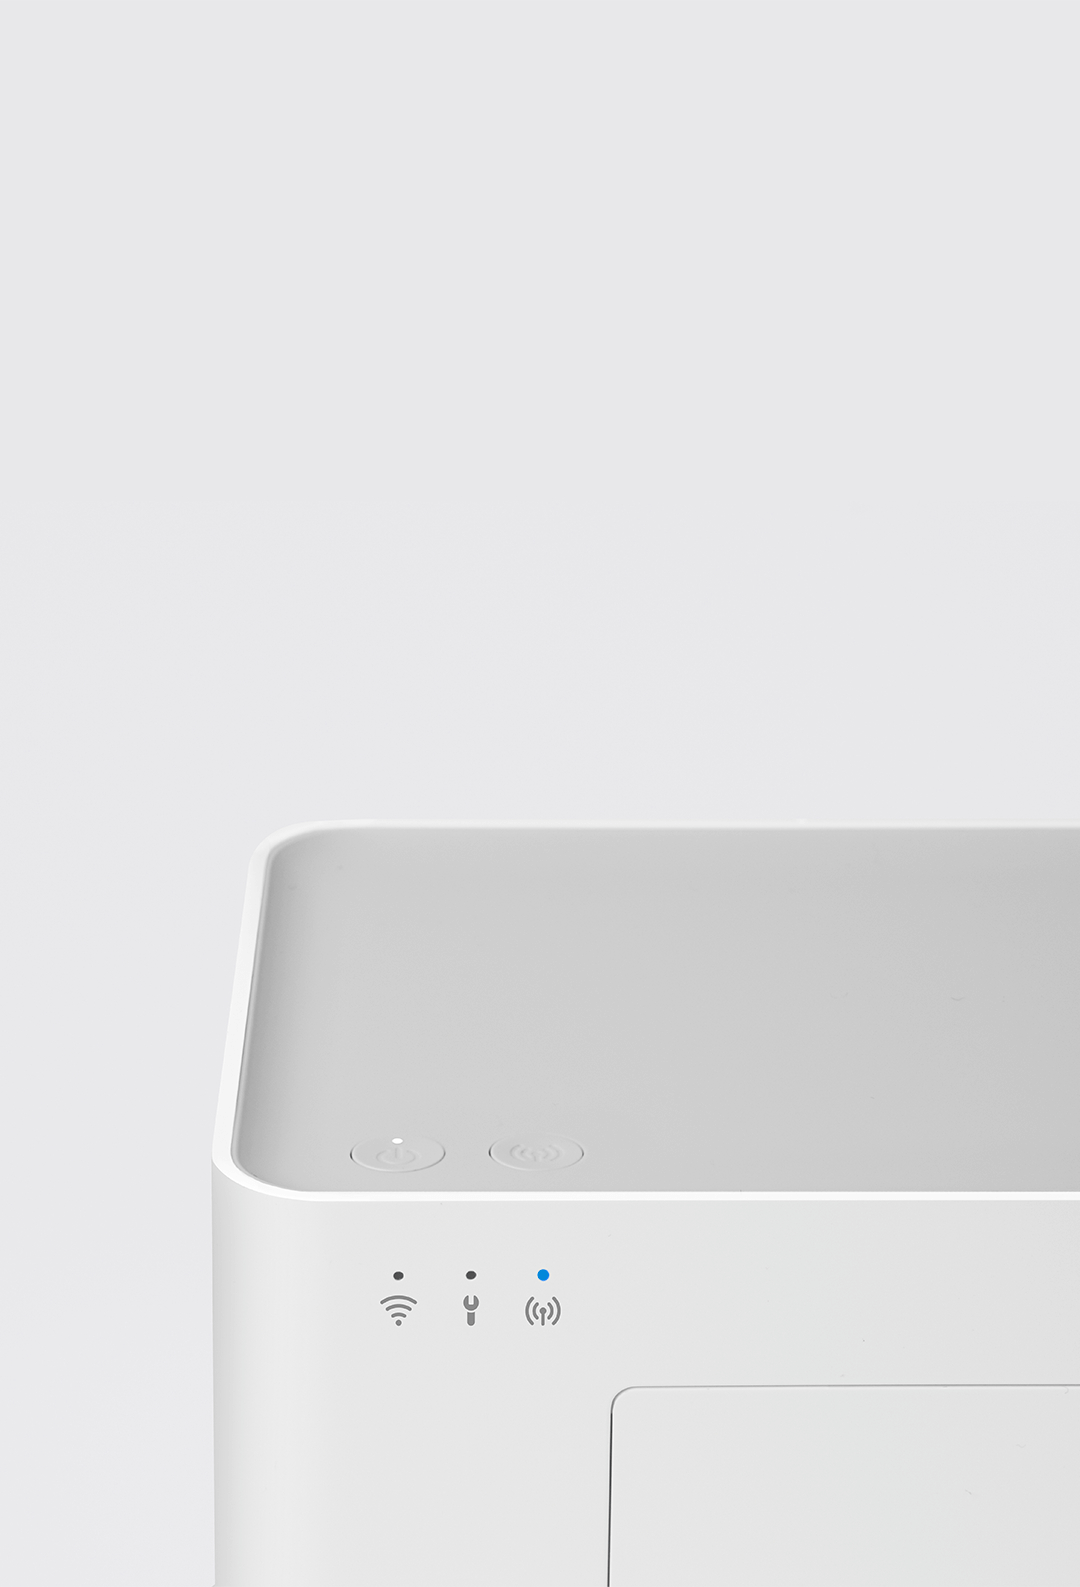 Instant Photographic Film Xiaomi Mi Portable Photo Printer